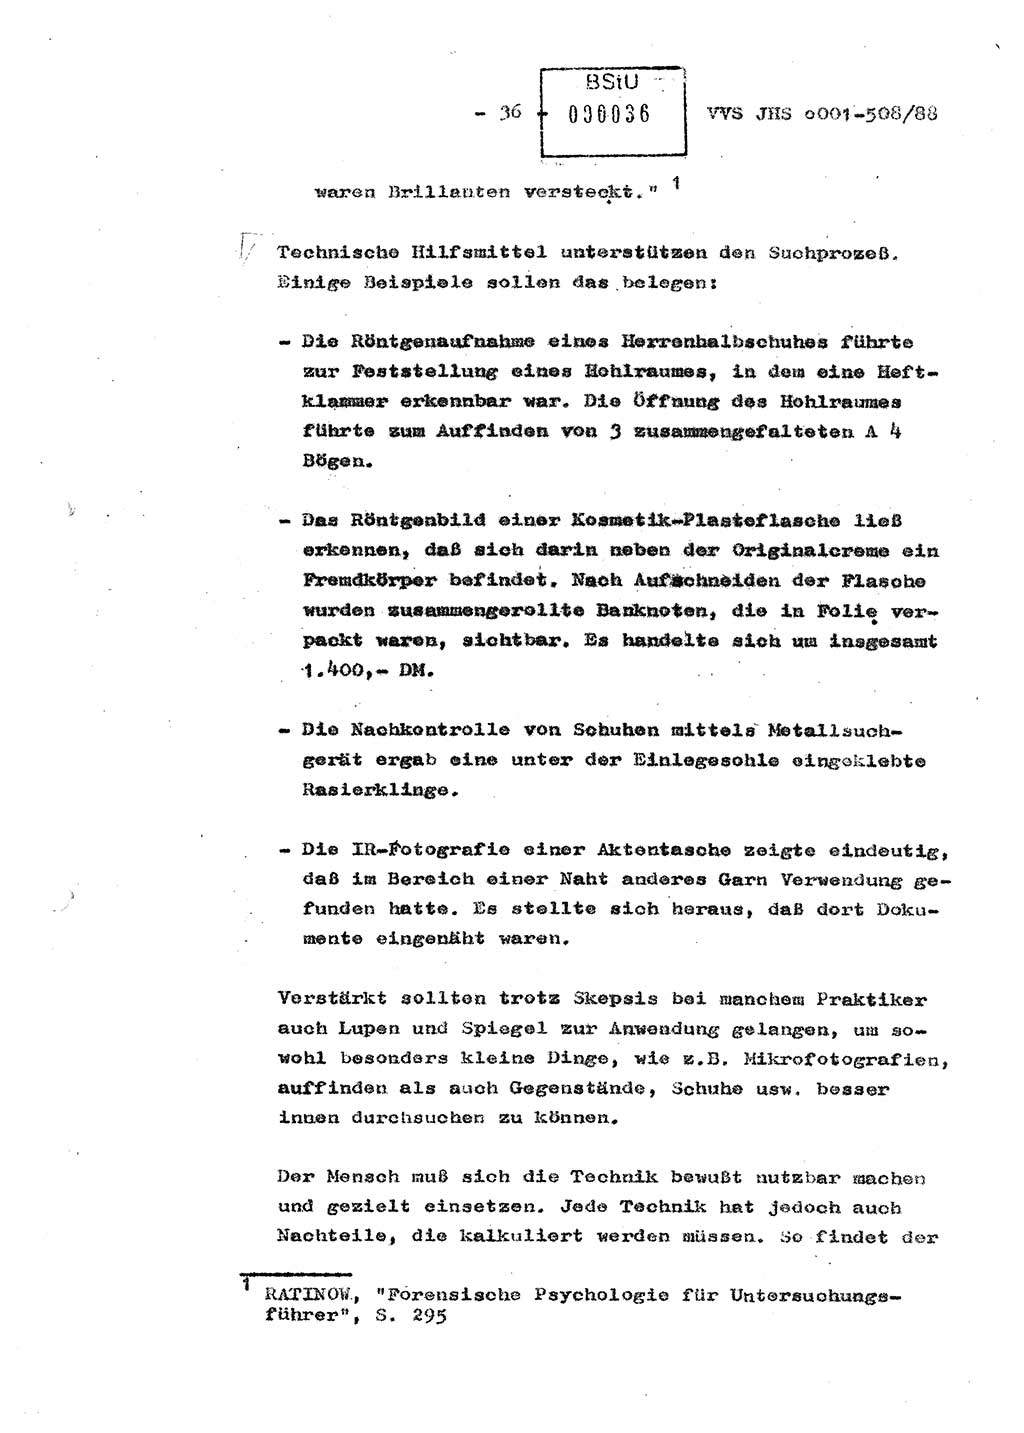 Diplomarbeit Hauptmann Christian Kätzel (Abt. ⅩⅣ), Ministerium für Staatssicherheit (MfS) [Deutsche Demokratische Republik (DDR)], Juristische Hochschule (JHS), Vertrauliche Verschlußsache (VVS) o001-508/88, Potsdam 1988, Blatt 36 (Dipl.-Arb. MfS DDR JHS VVS o001-508/88 1988, Bl. 36)